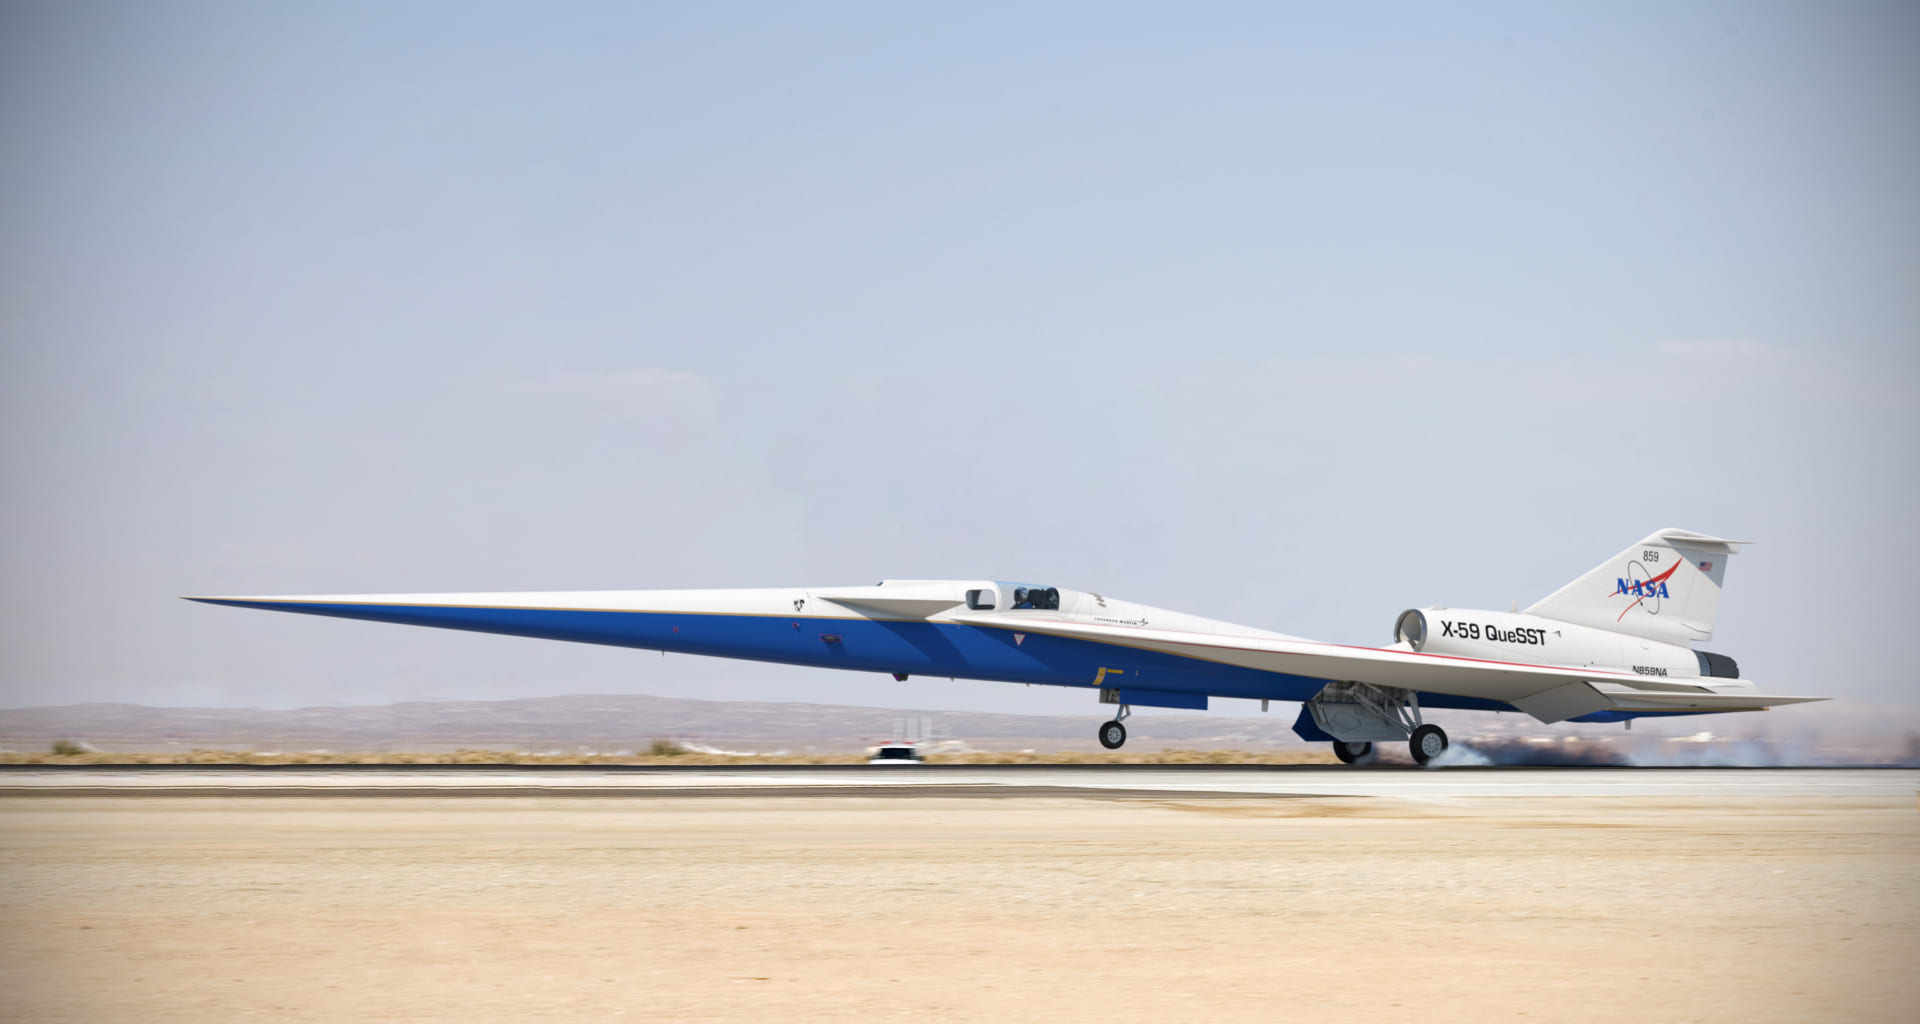 NASAが開発中の超音速航空機「X-59」 試験飛行に向けて開発の最終段階 